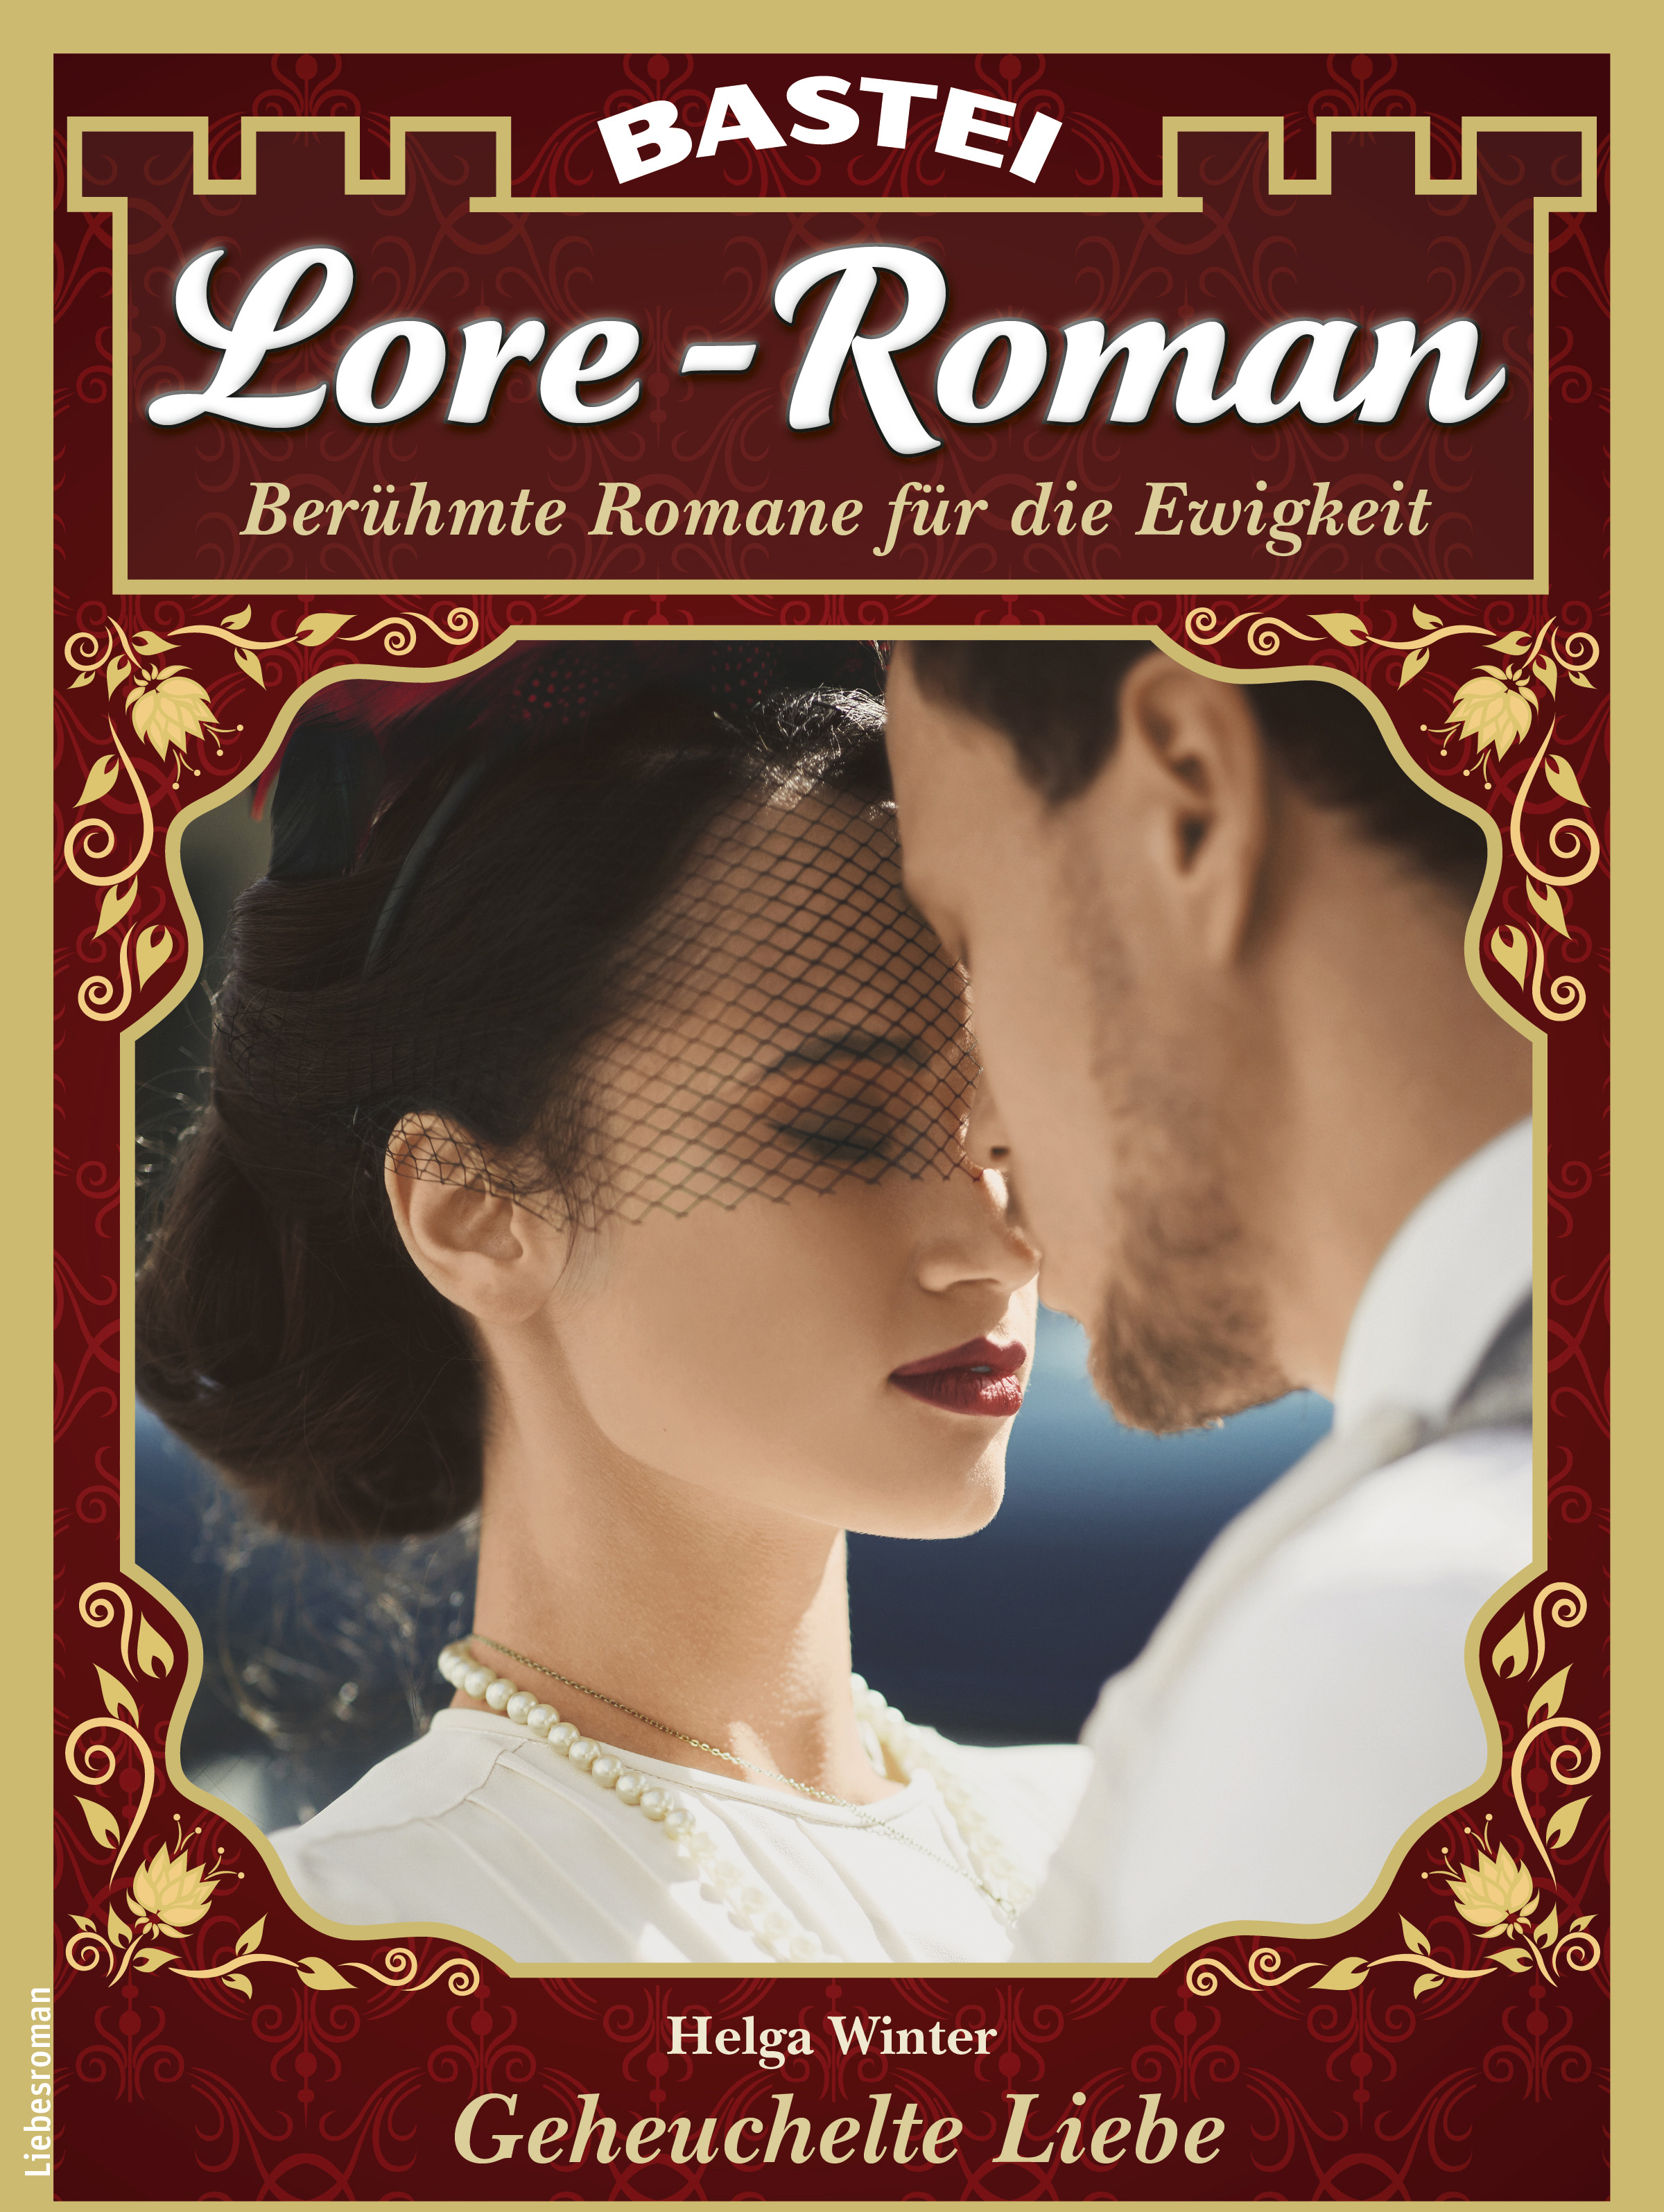 Lore-Roman 137